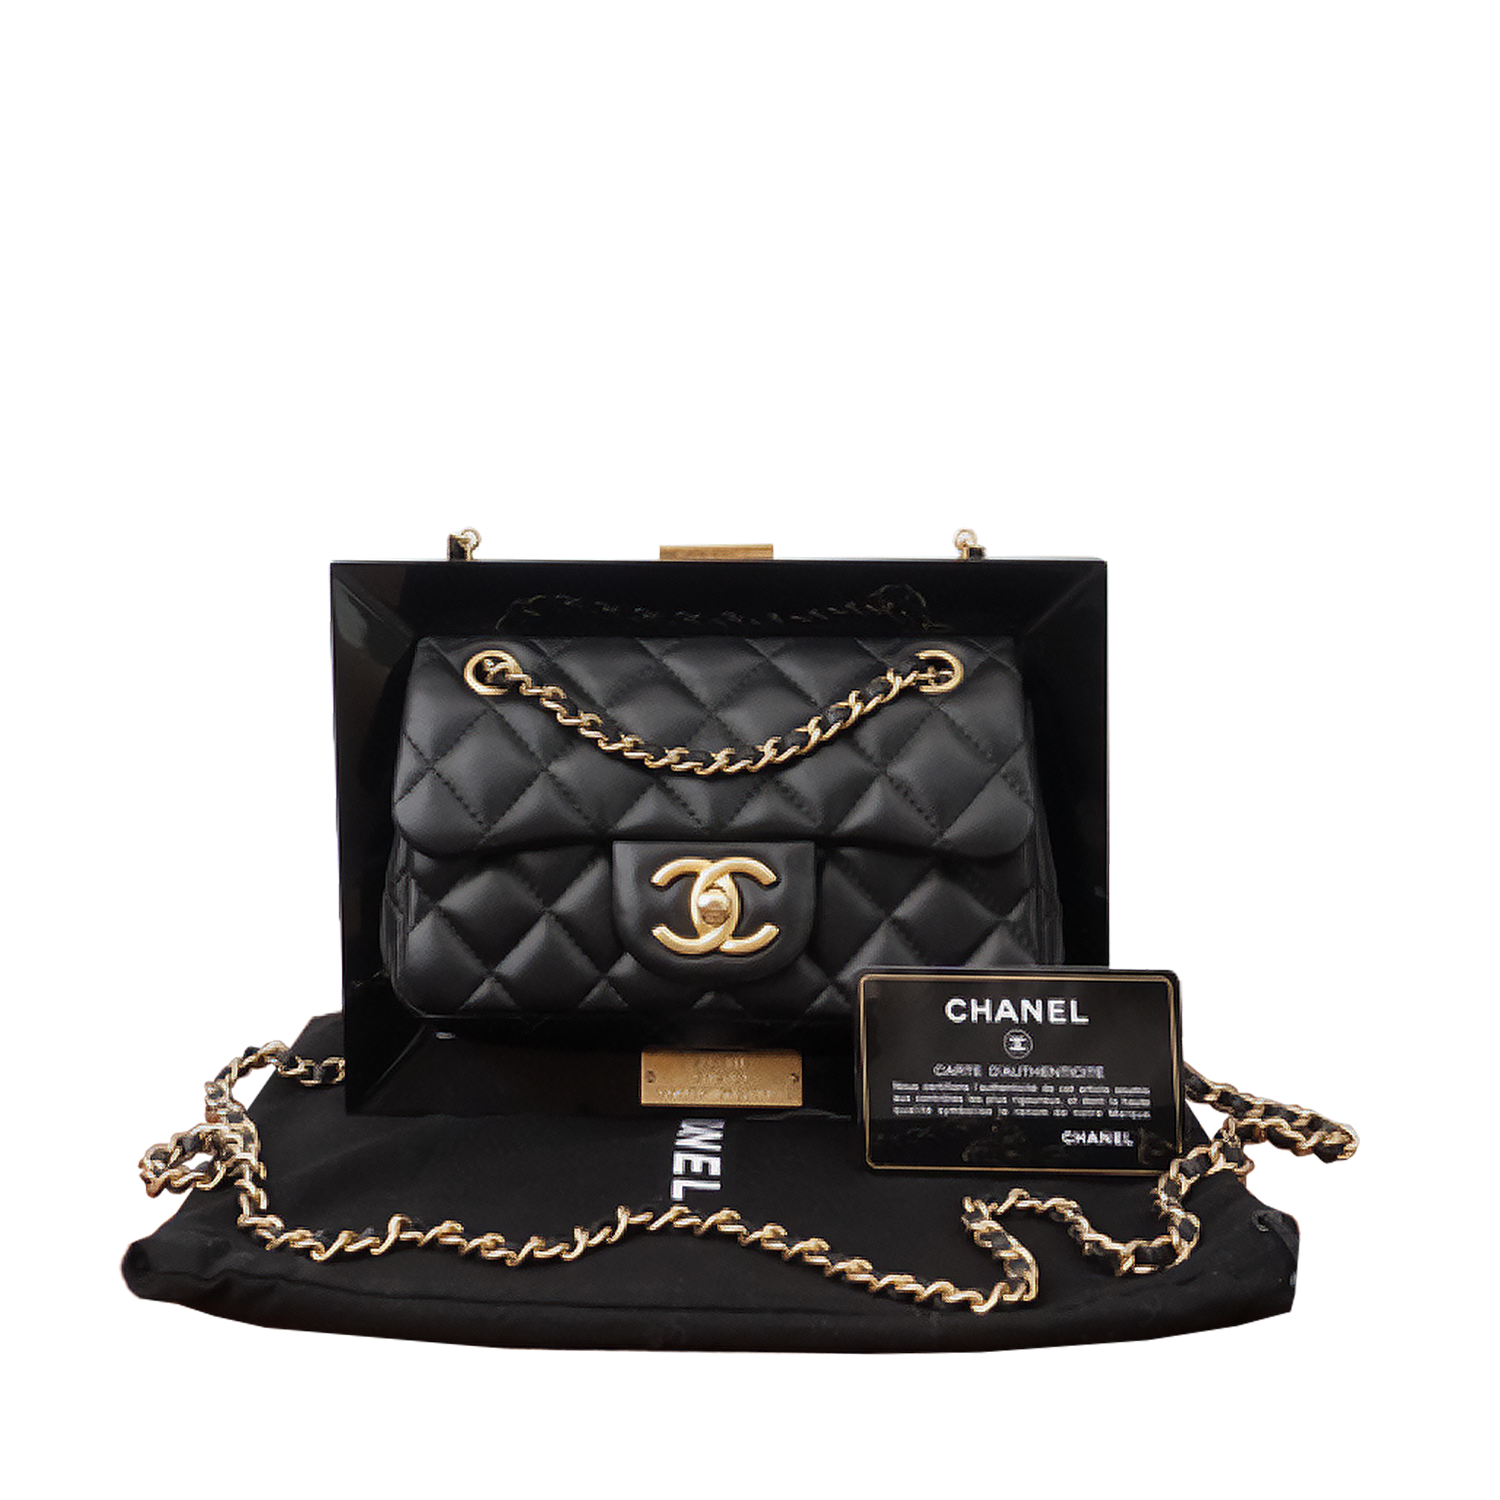 Fashion Jackson | How to Buy a Discounted Chanel Handbag on eBay | Chanel  bag outfit, Fashion jackson, Chanel handbags